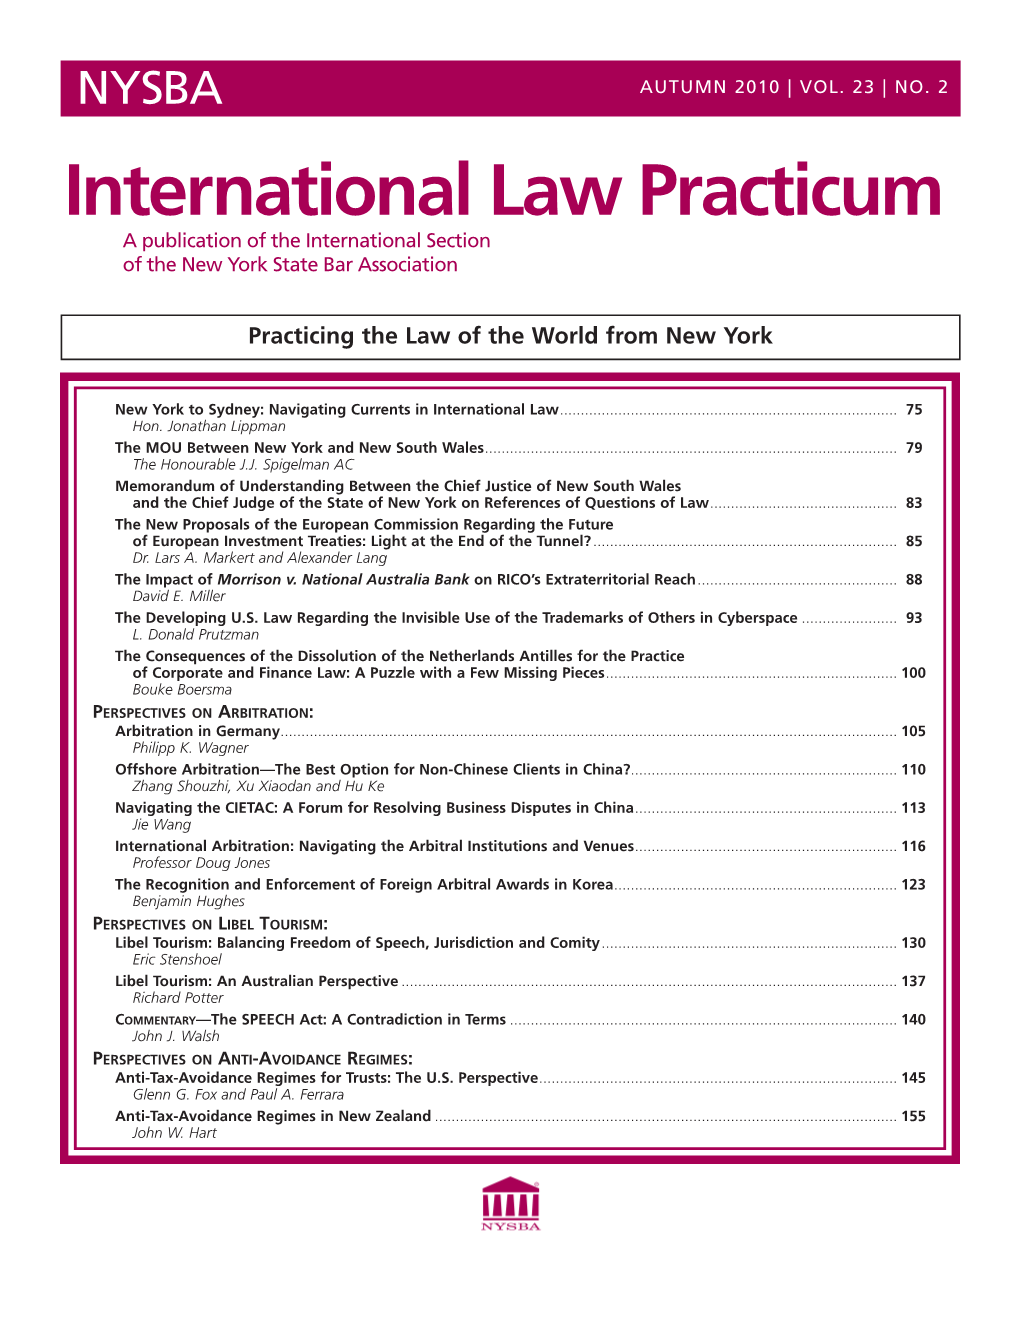 International Law Practicum a Publication of the International Section of the New York State Bar Association